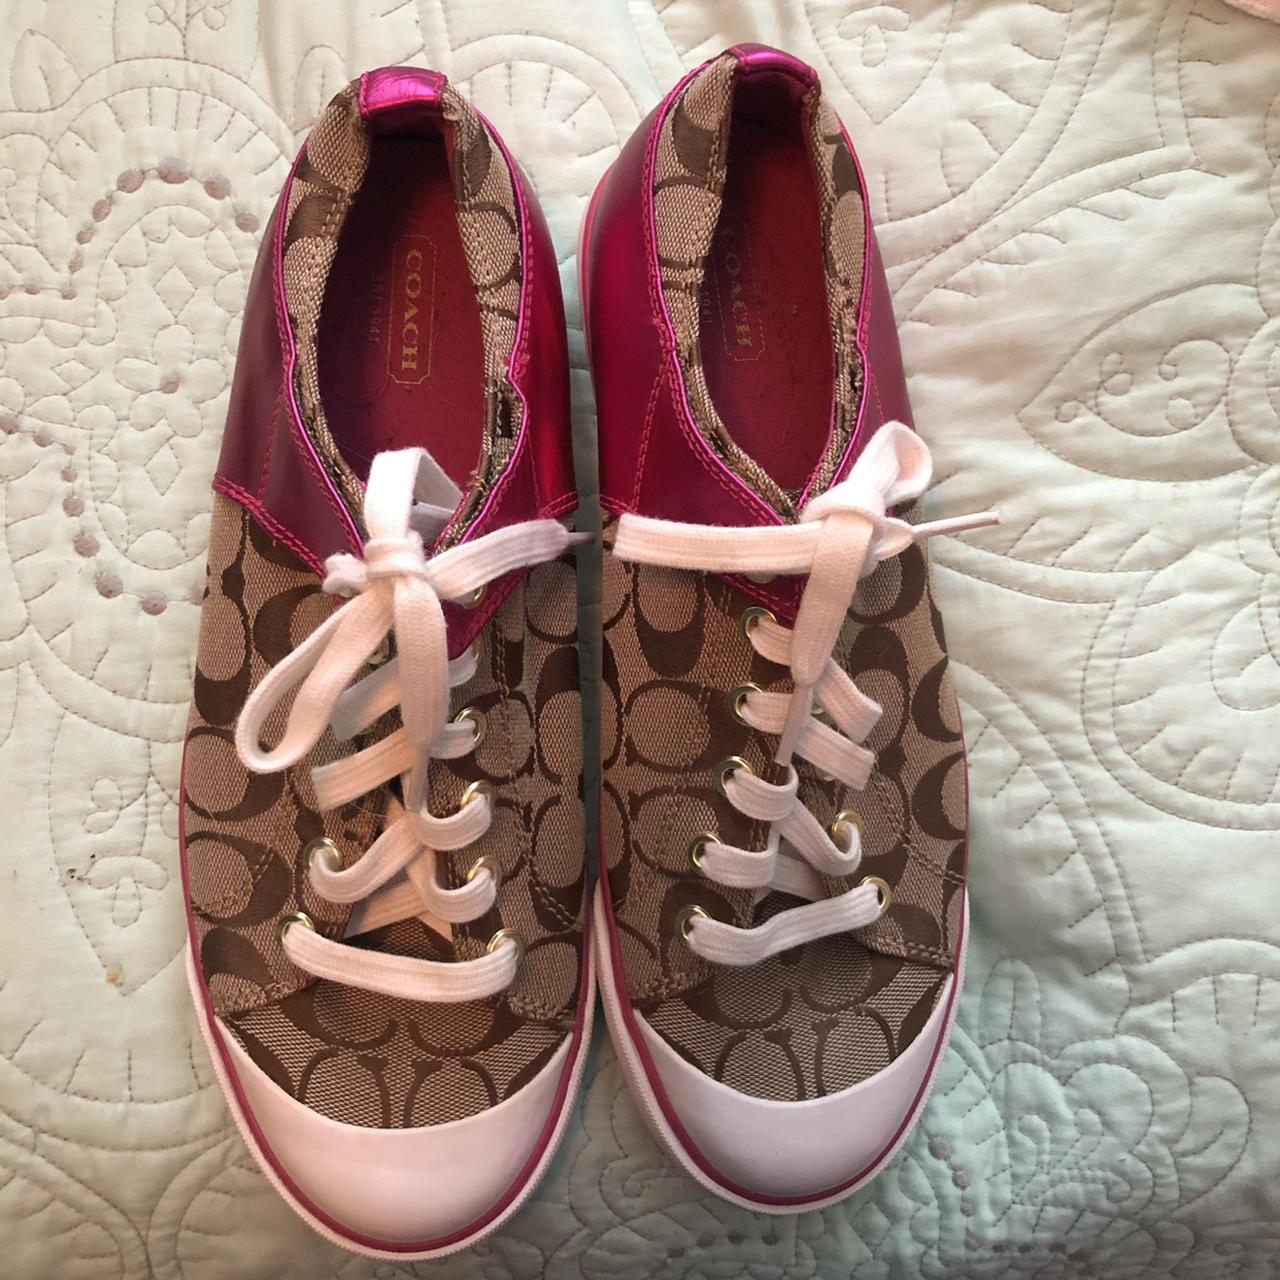 Title – Abros shoes